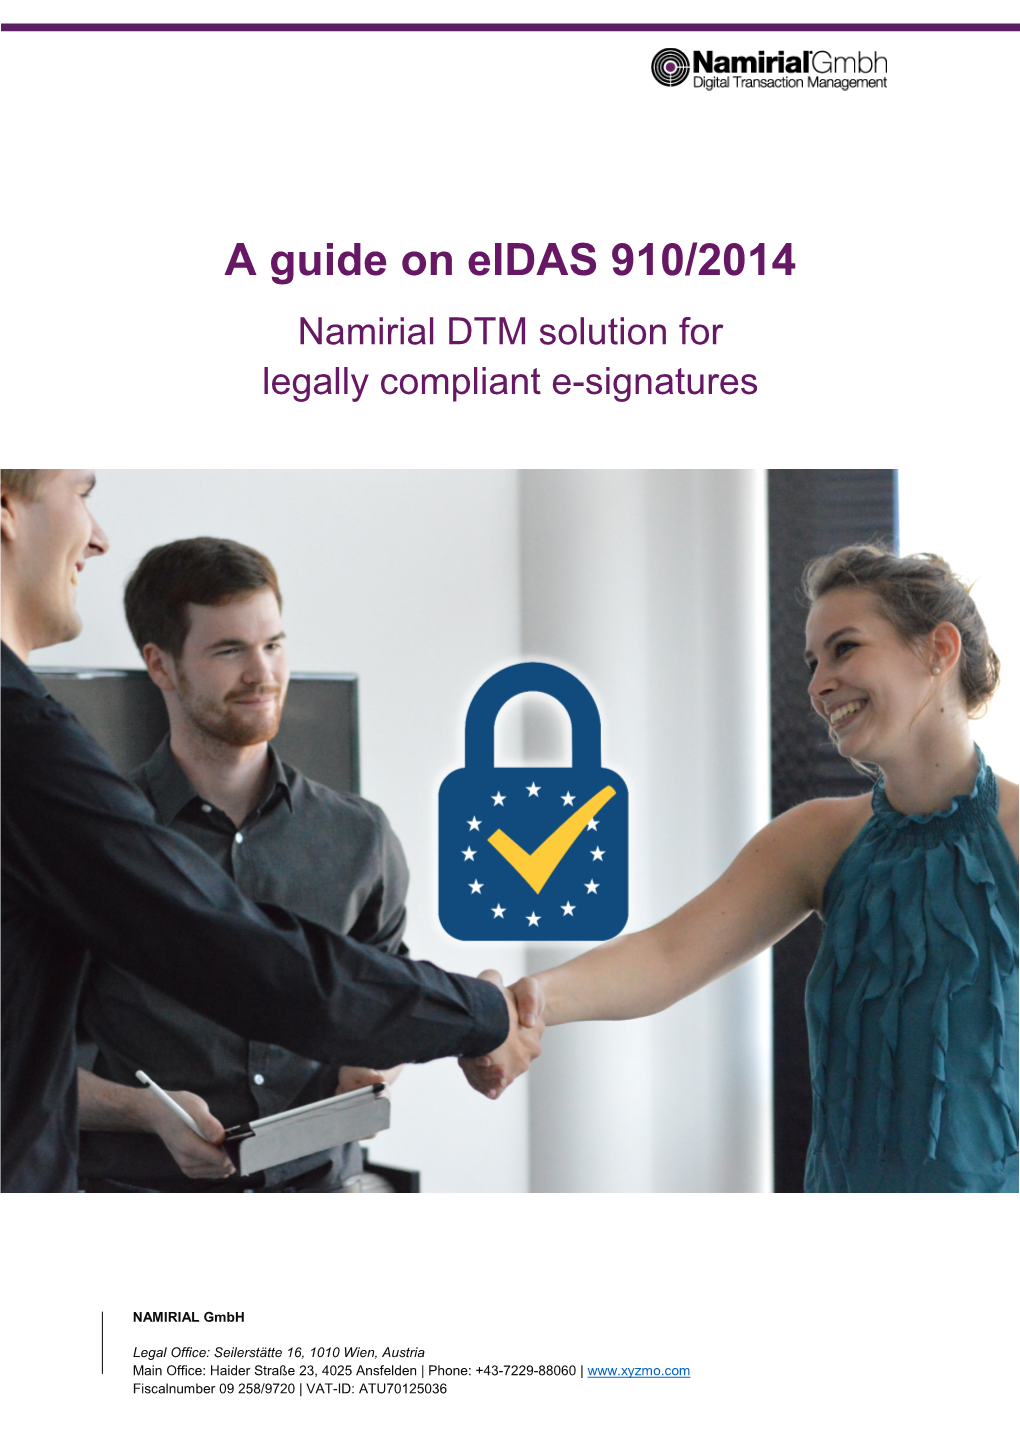 A Guide on Eidas 910/2014 Namirial DTM Solution for Legally Compliant E-Signatures